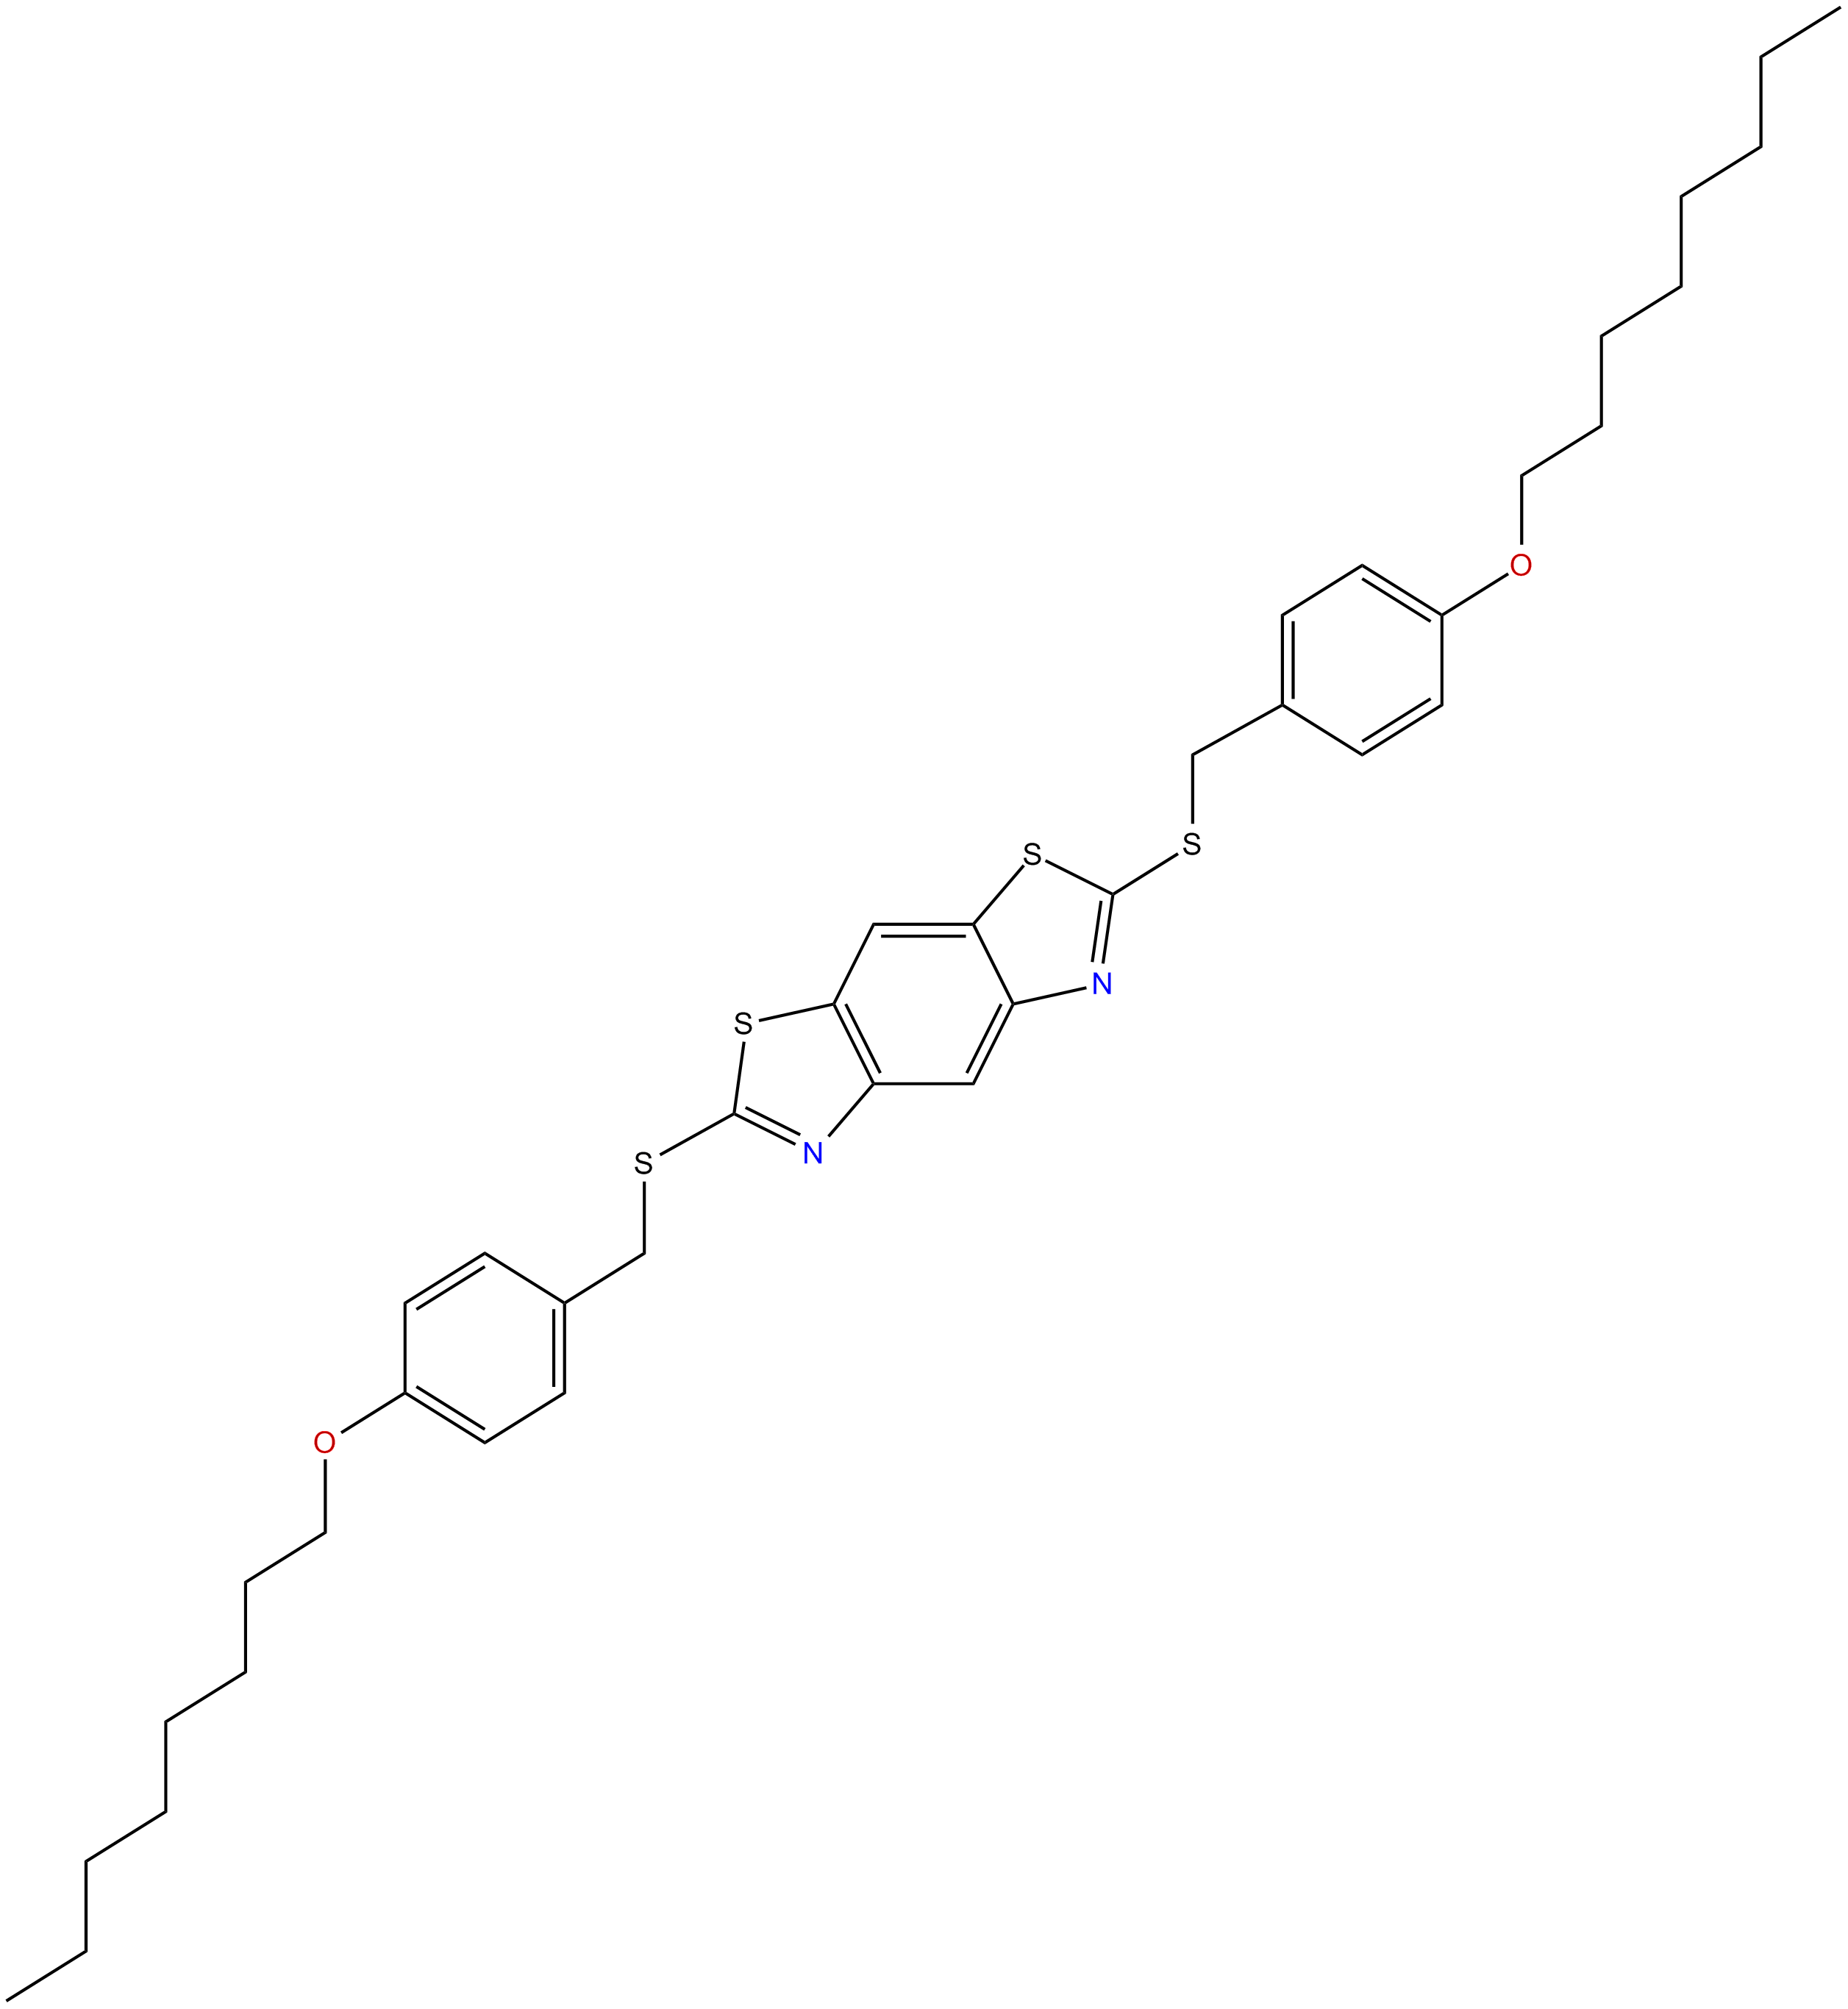 Image of 2,6-di(4-octyloxybenzylthio)benzo-[1,2-4:5,4-d']-bisthiazole